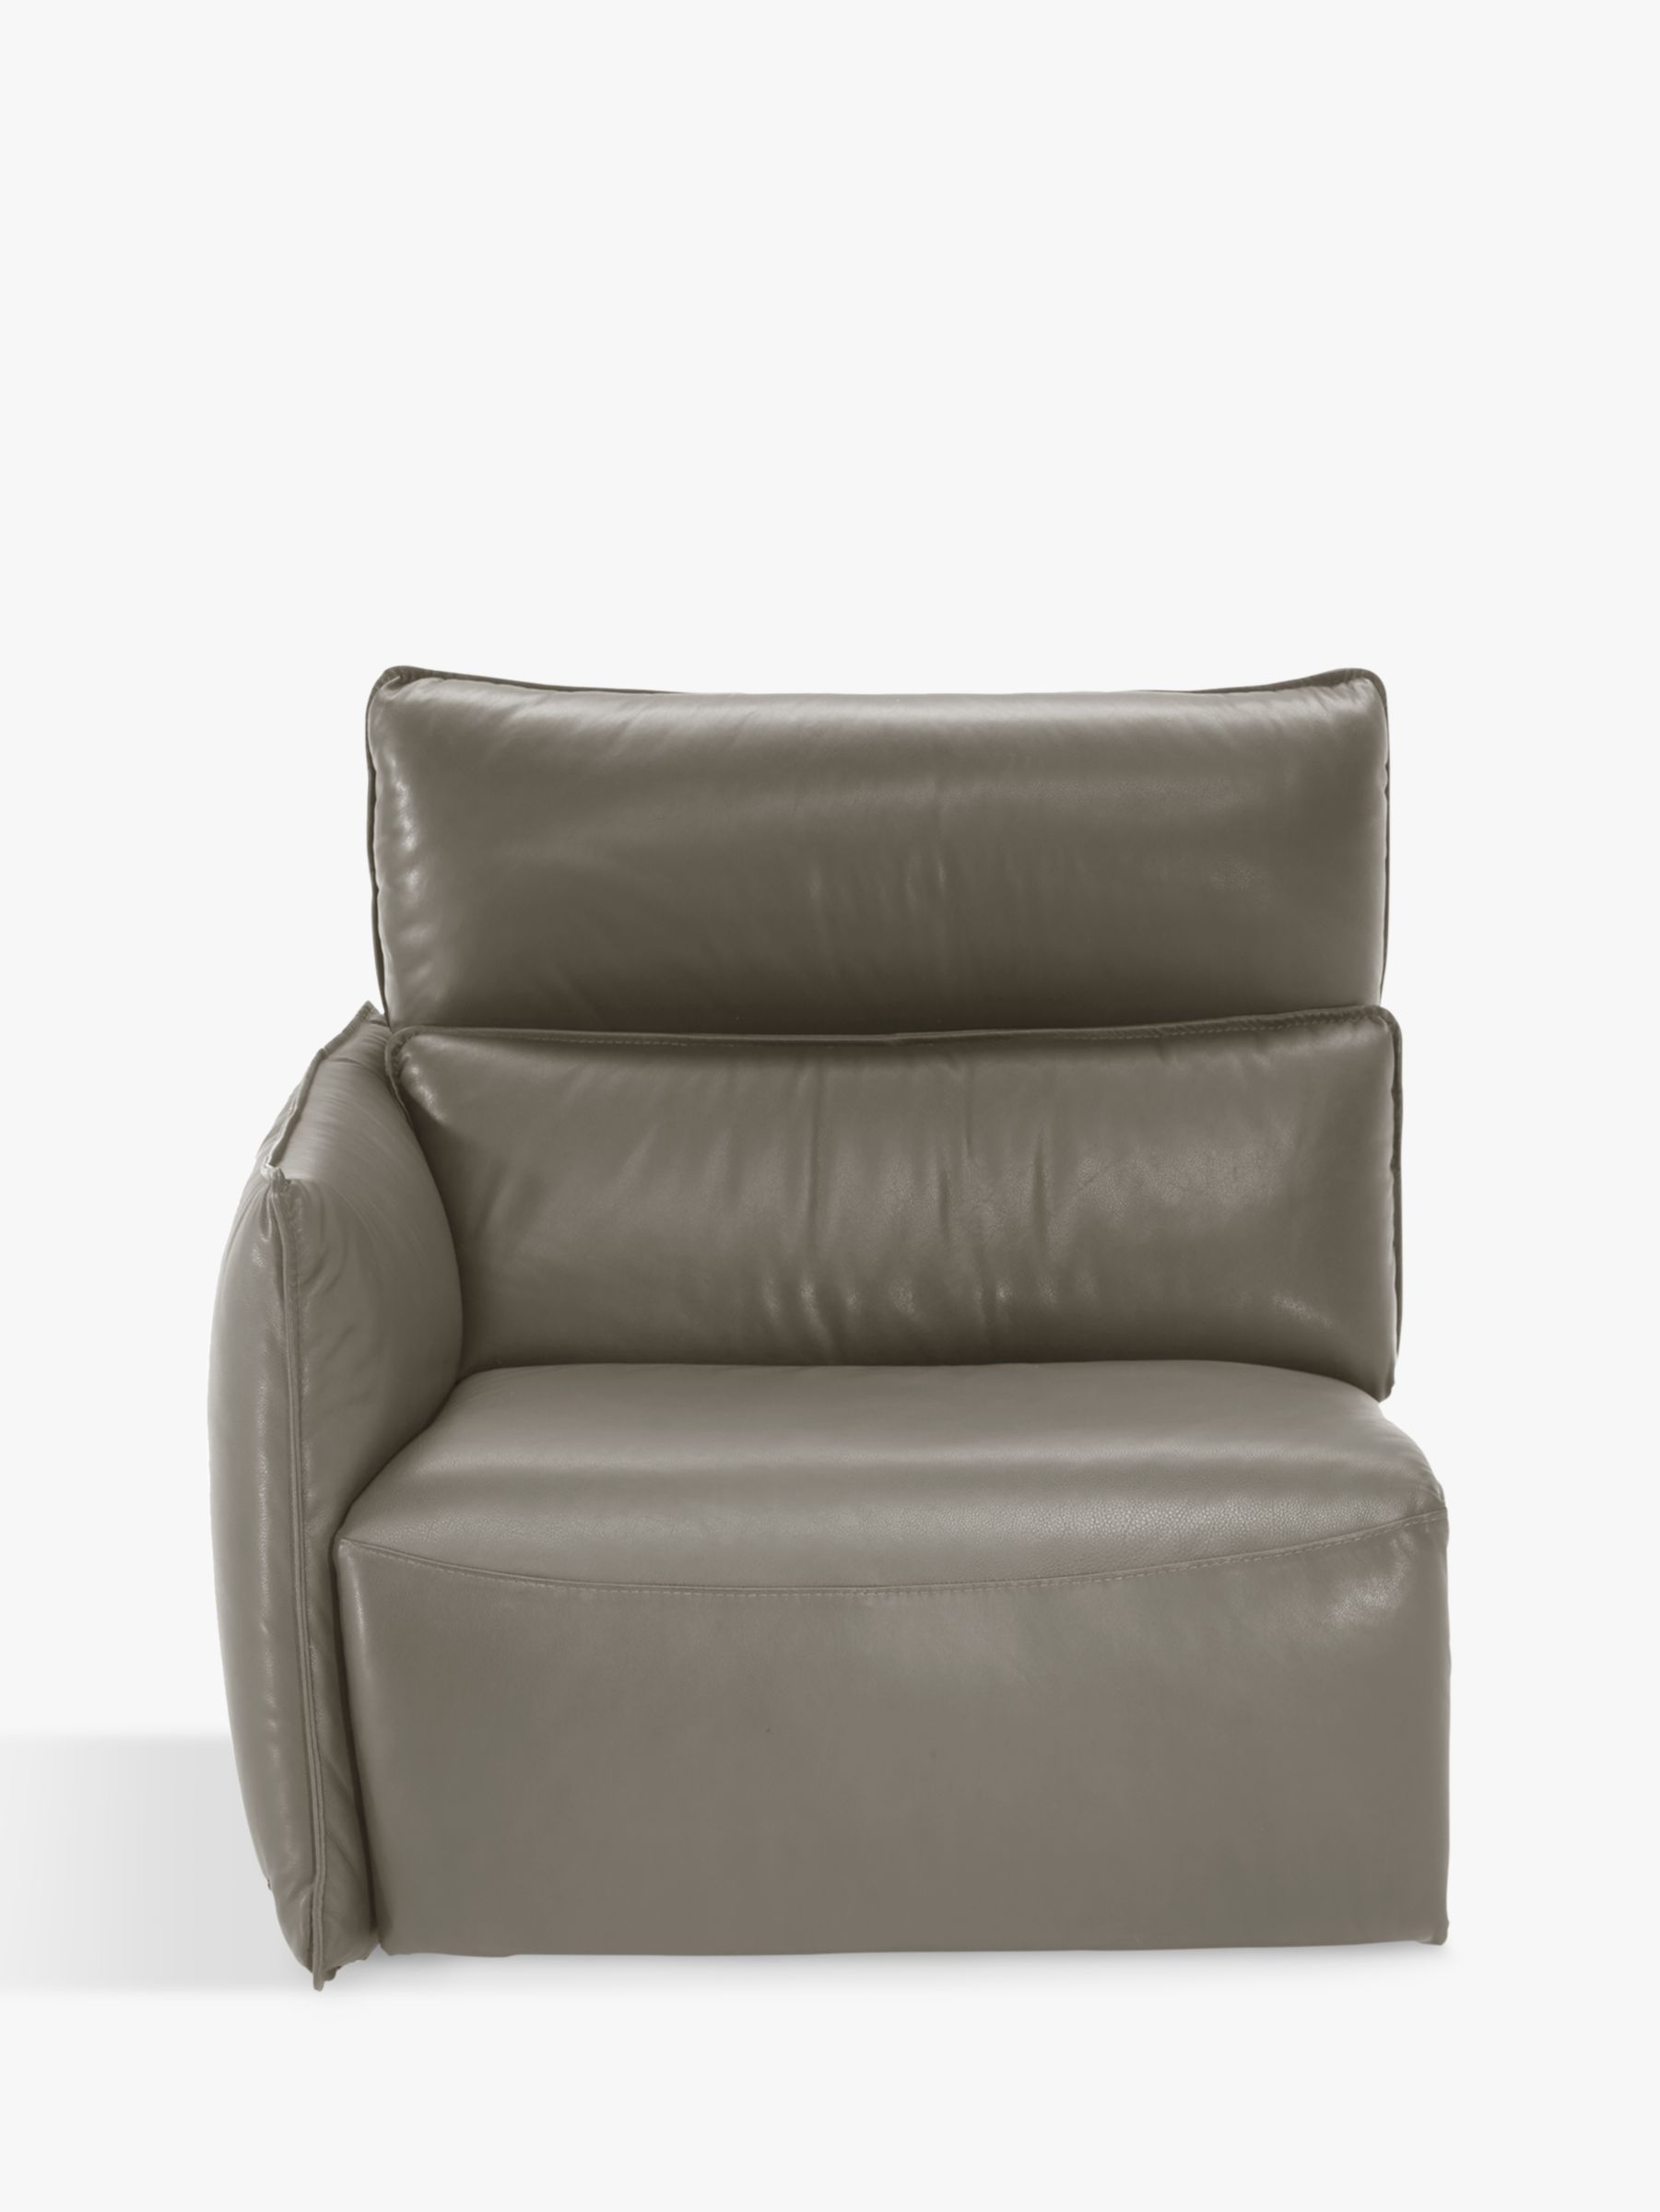 Natuzzi Stupore 402 Rhf Leather Modular Sofa Unit With Power